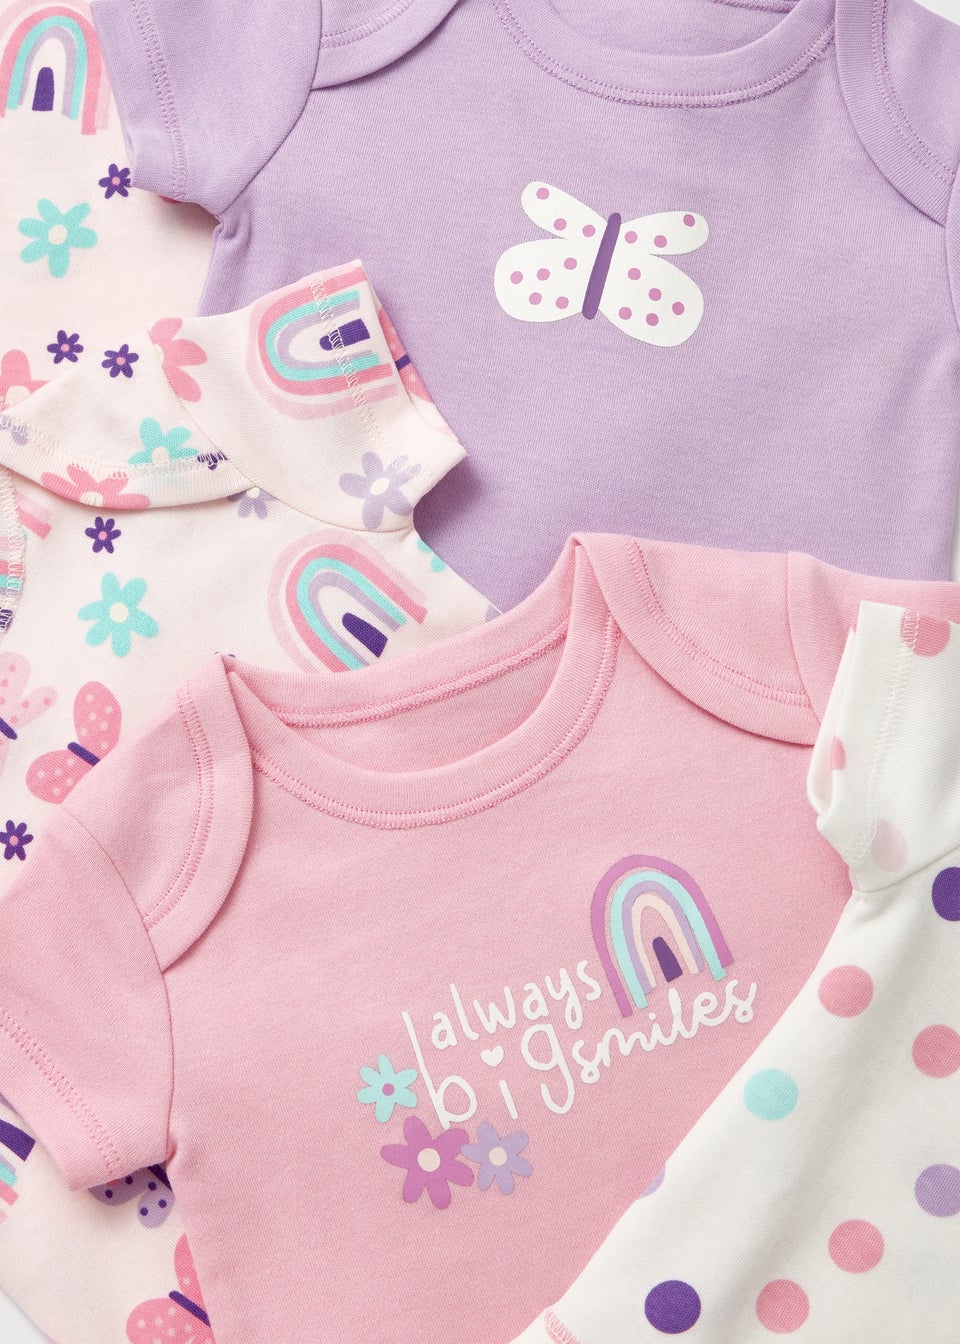 Baby 5 Pack Pink Butterfly Bodysuits (Newborn-23mths)